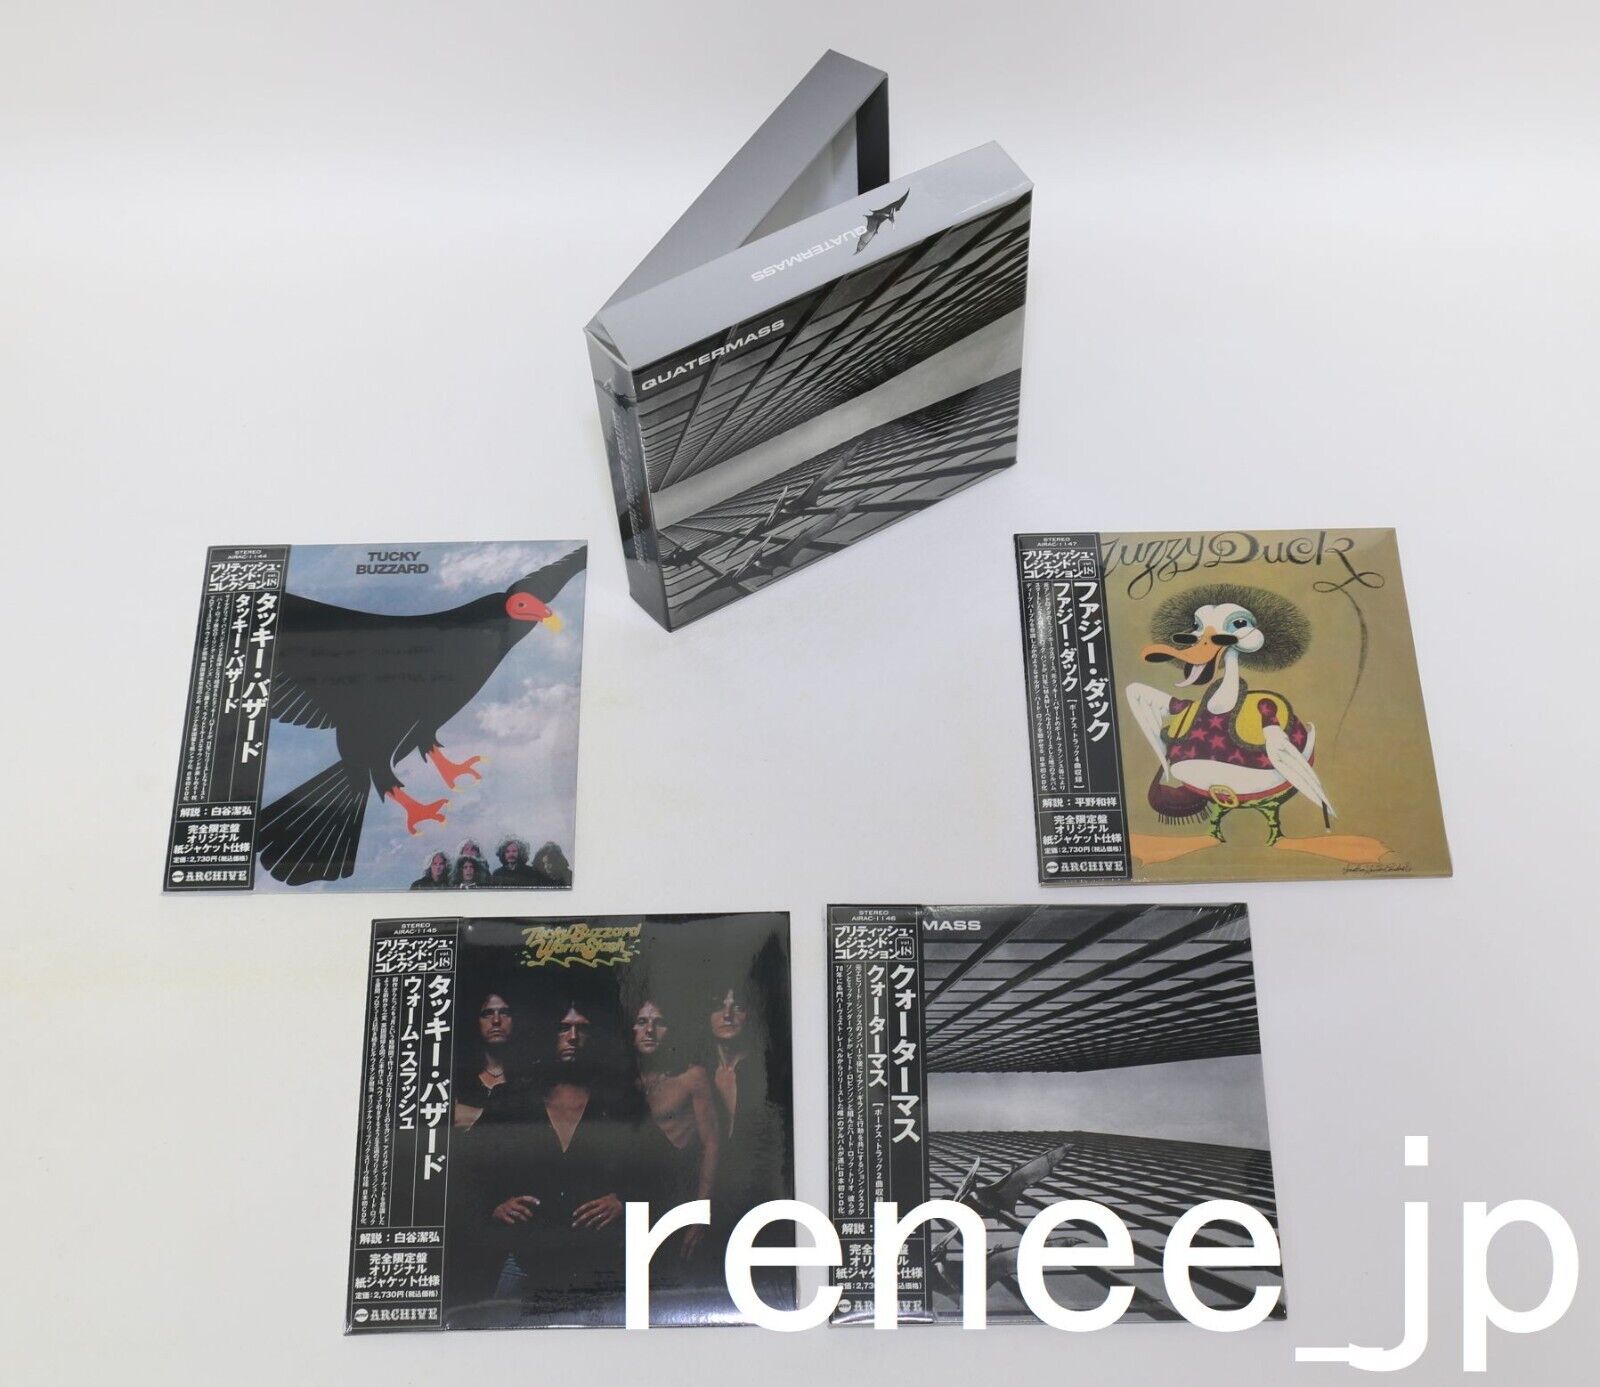 Quatermass, Tucky Buzzard, Fuzzy Duck / JAPAN Mini LP CD x 4 titles + PROMO BOX